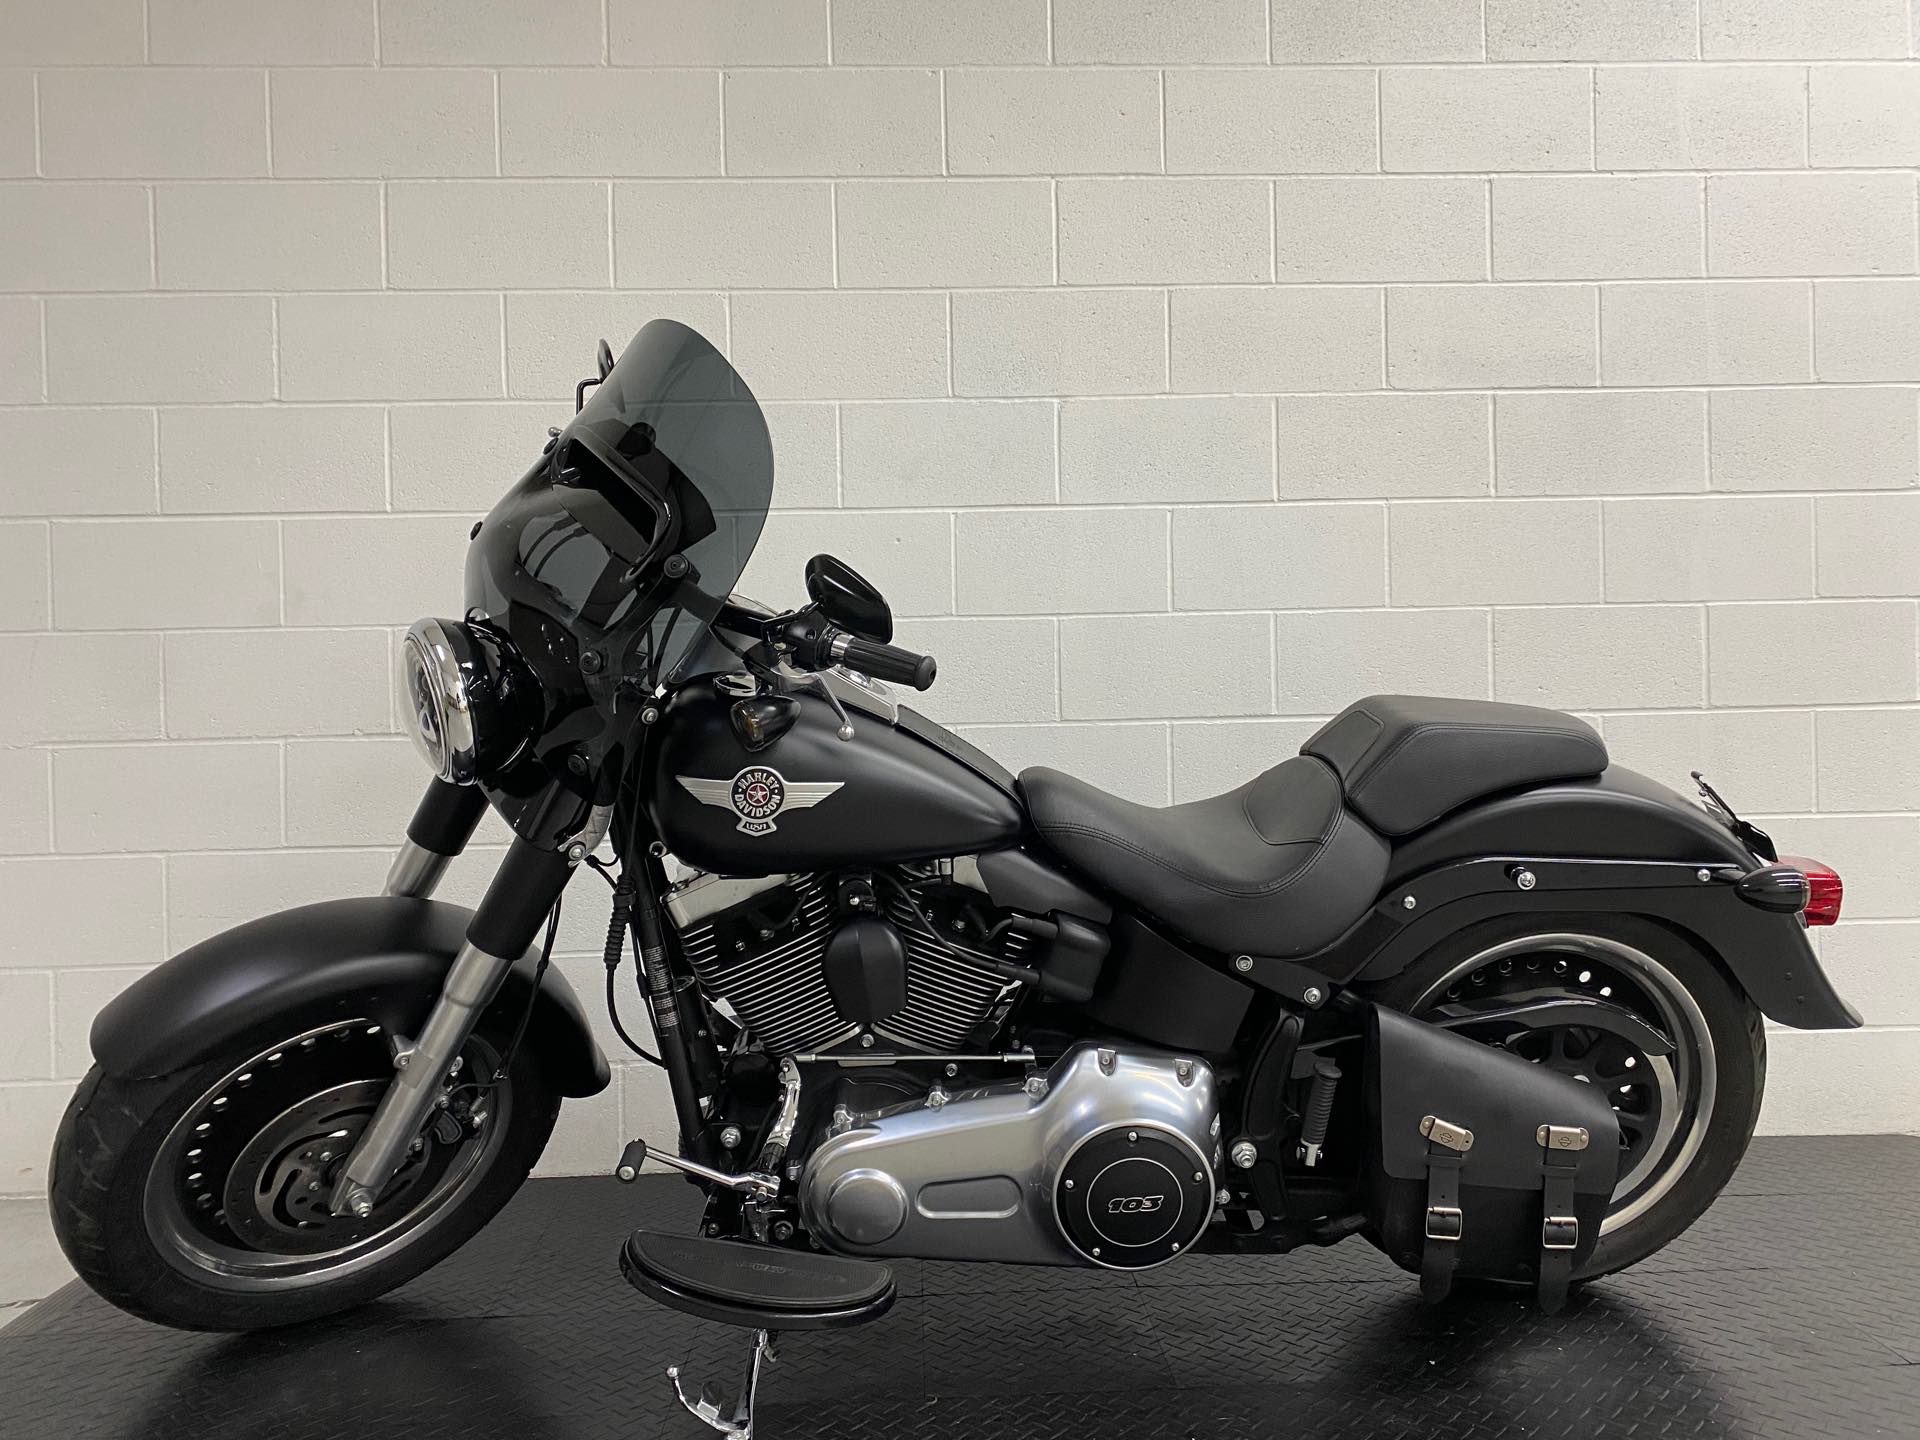 2014 Harley-Davidson Softail Fat Boy Lo at Destination Harley-Davidson®, Silverdale, WA 98383